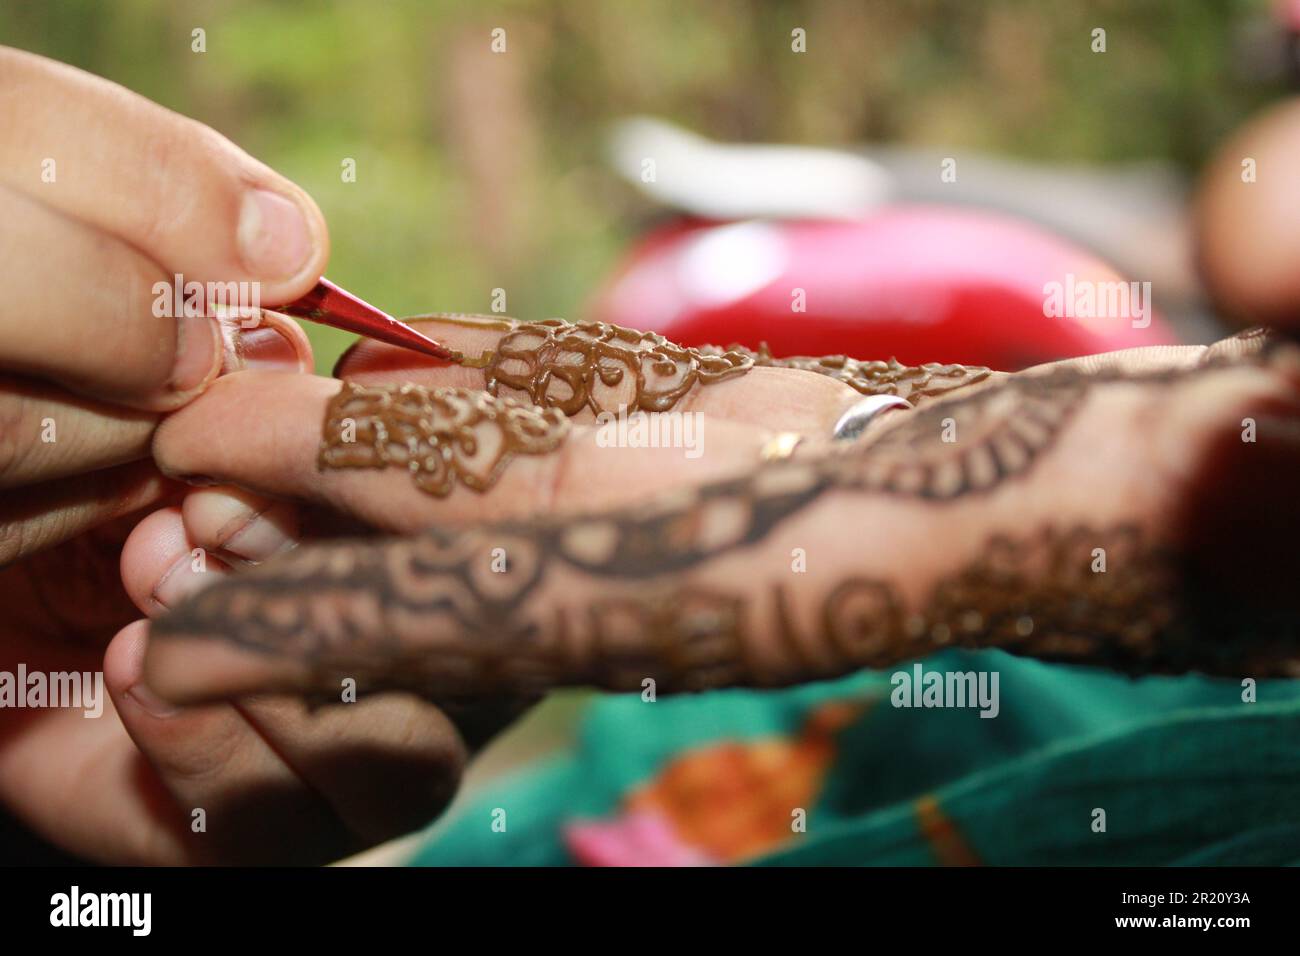 Henna Tattoo Mehndi on hand bridal mehndi Design Background close up Stock Photo